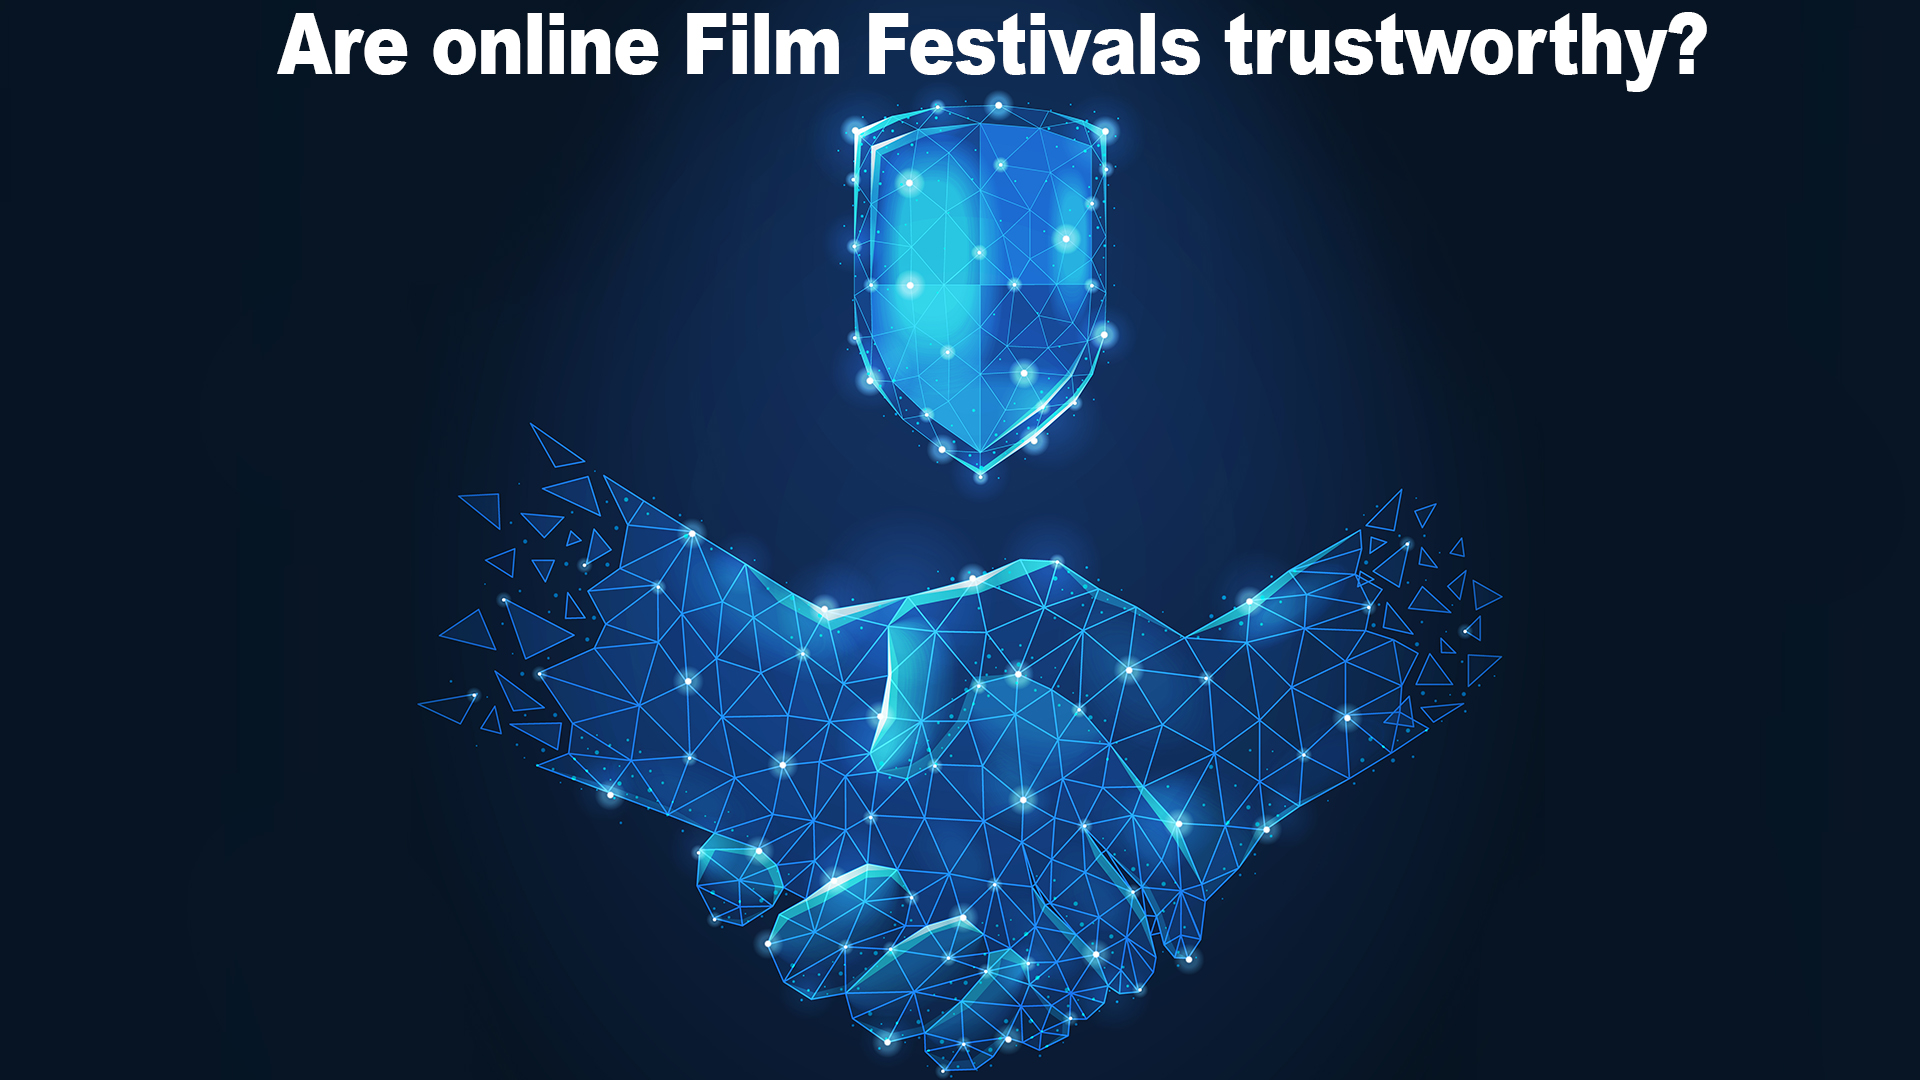 Can we trust online Film-Festivals?